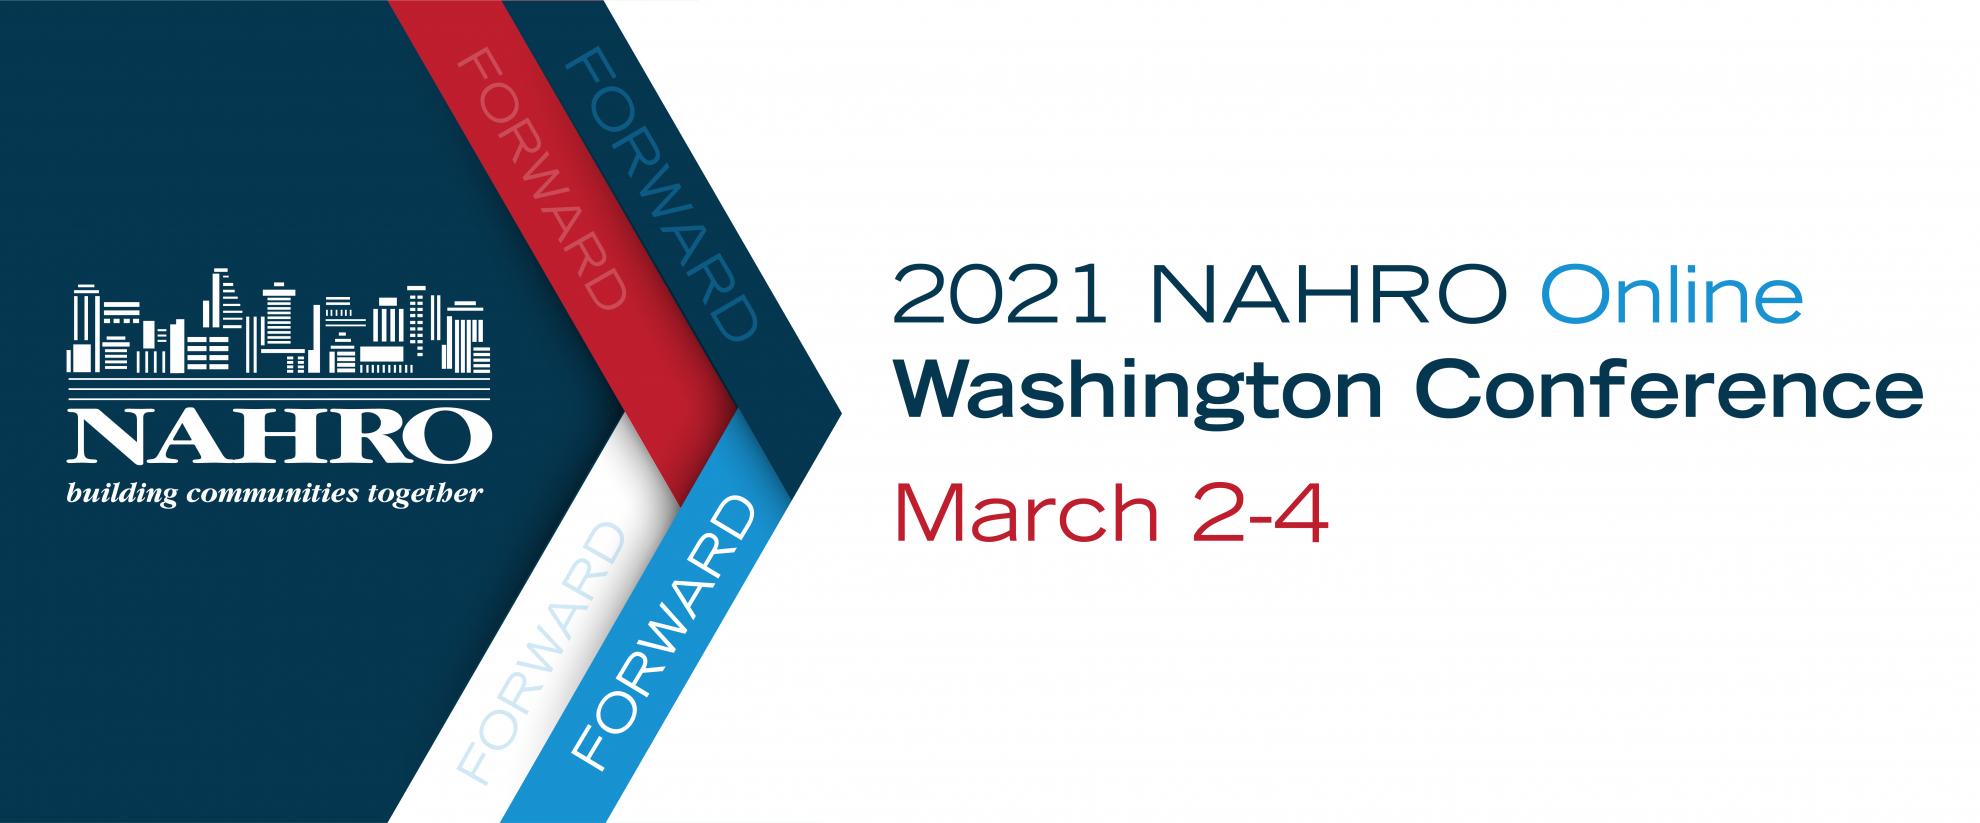 2021 NAHRO Online Washington Conference The National Association of